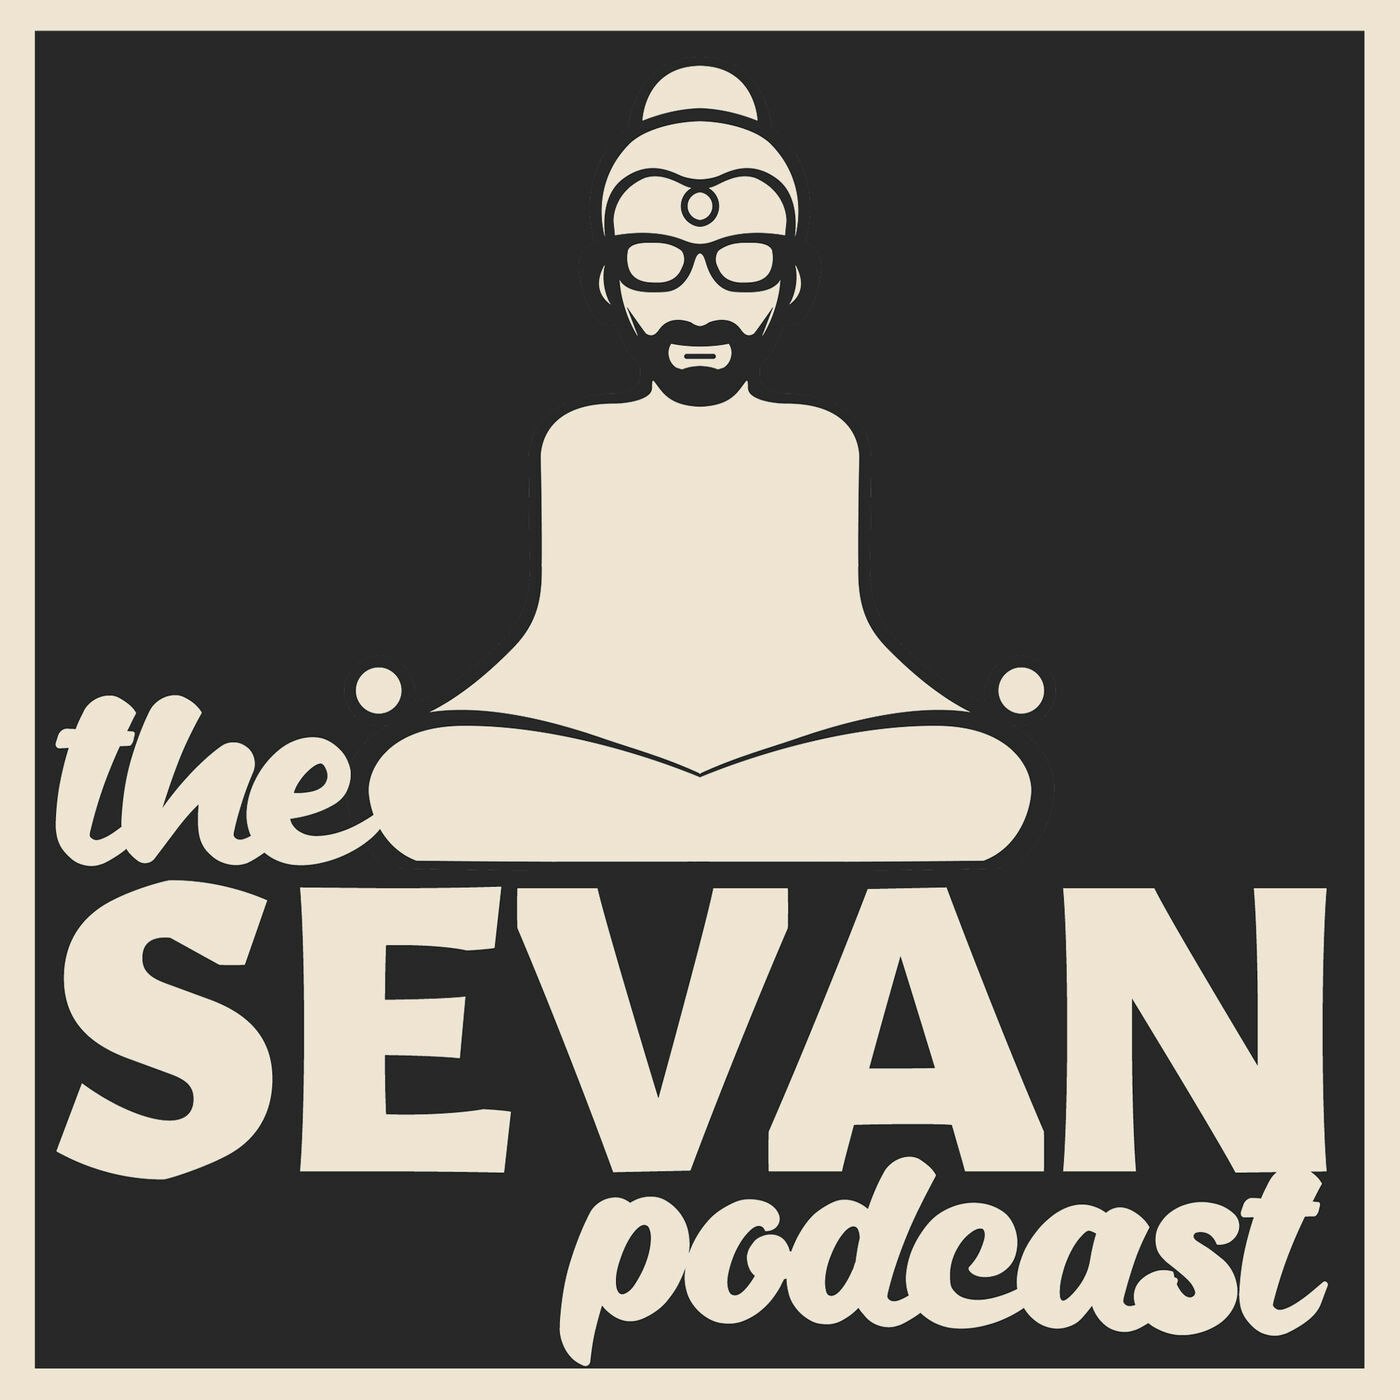 The Sevan Podcast